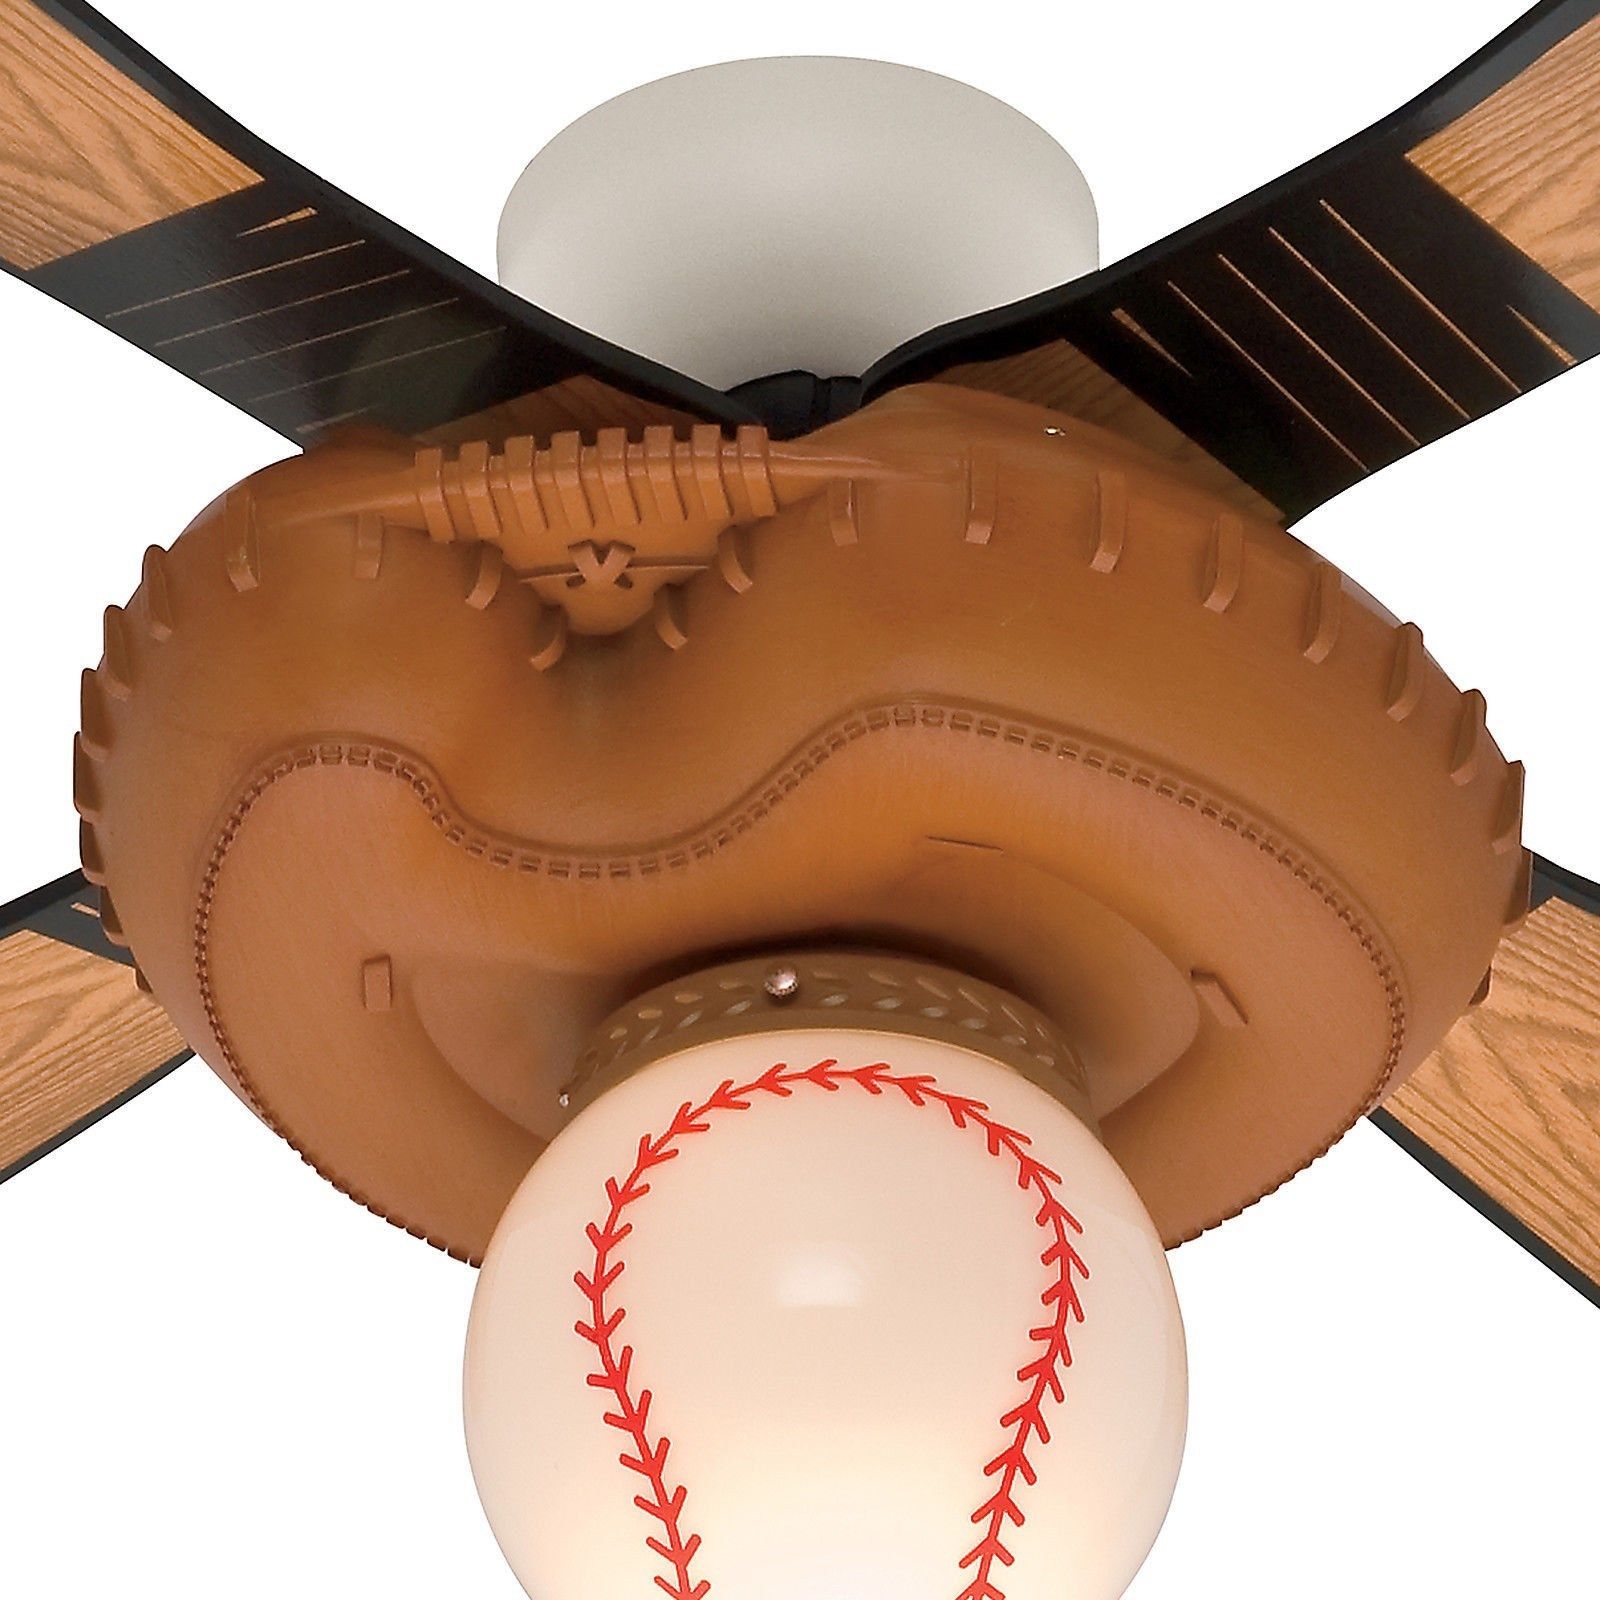 Permalink to Baseball Ceiling Fan Light Kit